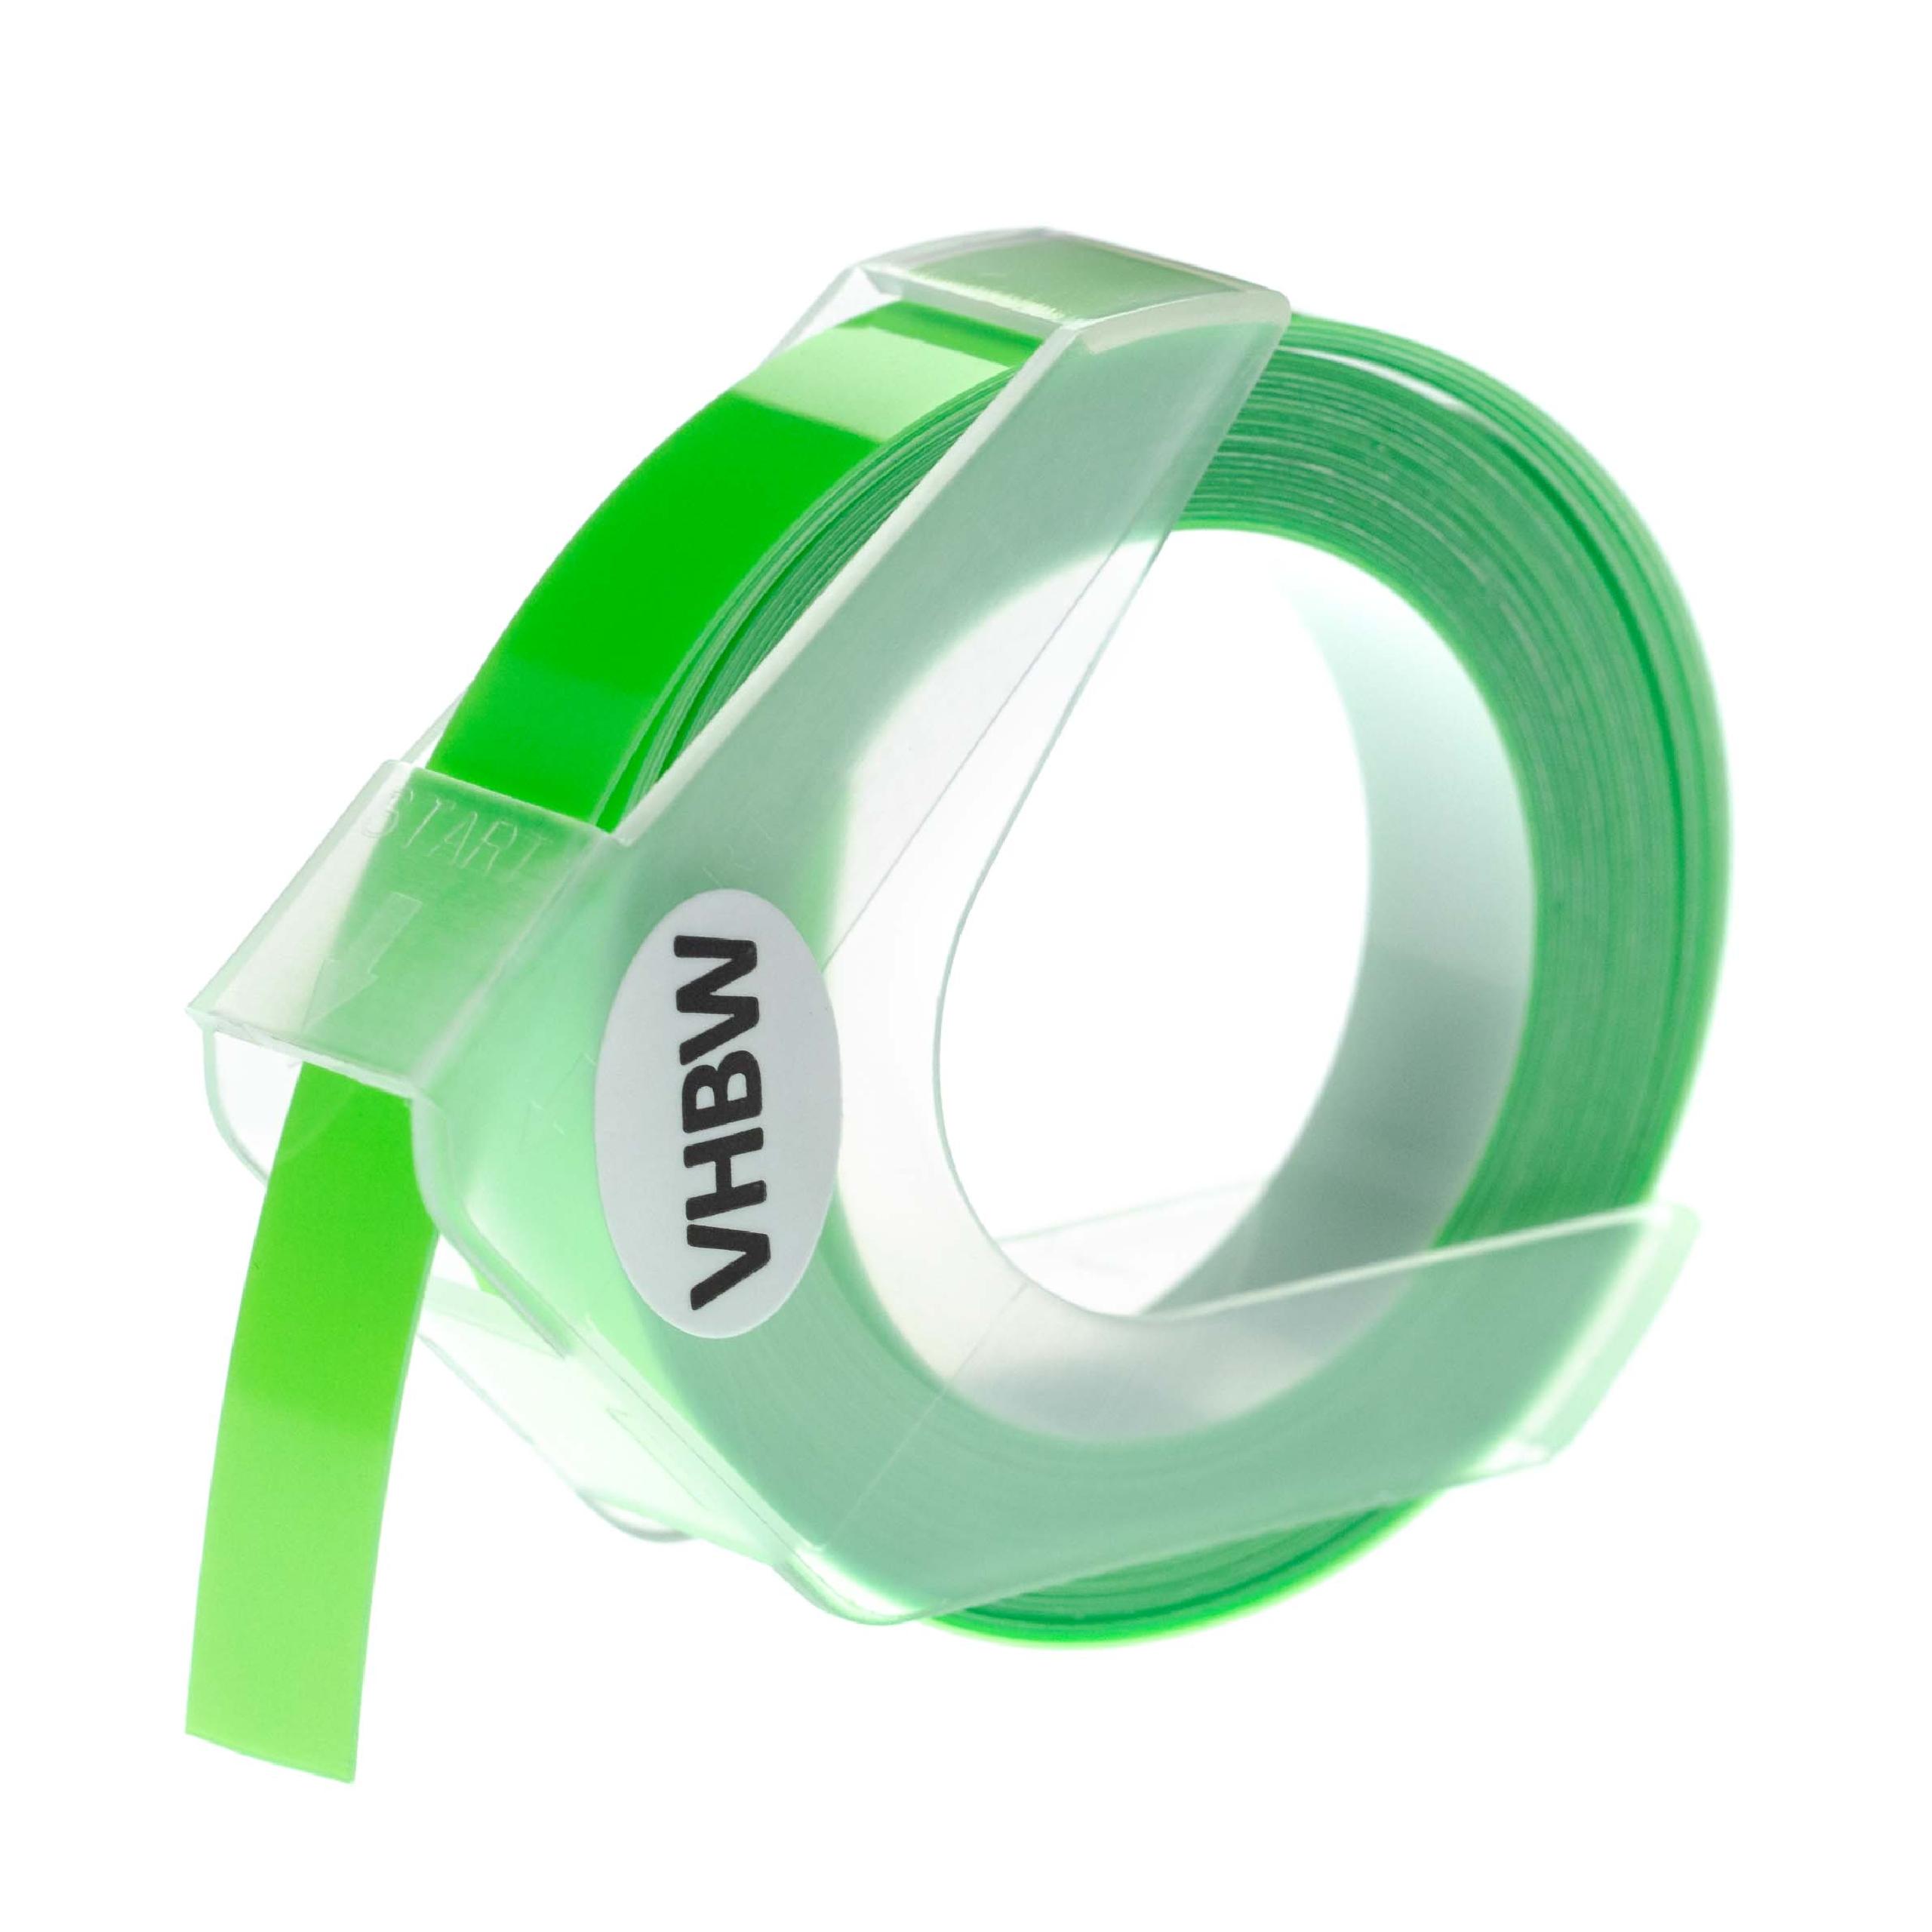 Cassette à ruban, gaufrage relief remplace Dymo S0898290, 0898290 - 9mm lettrage Blanc ruban Vert fluo